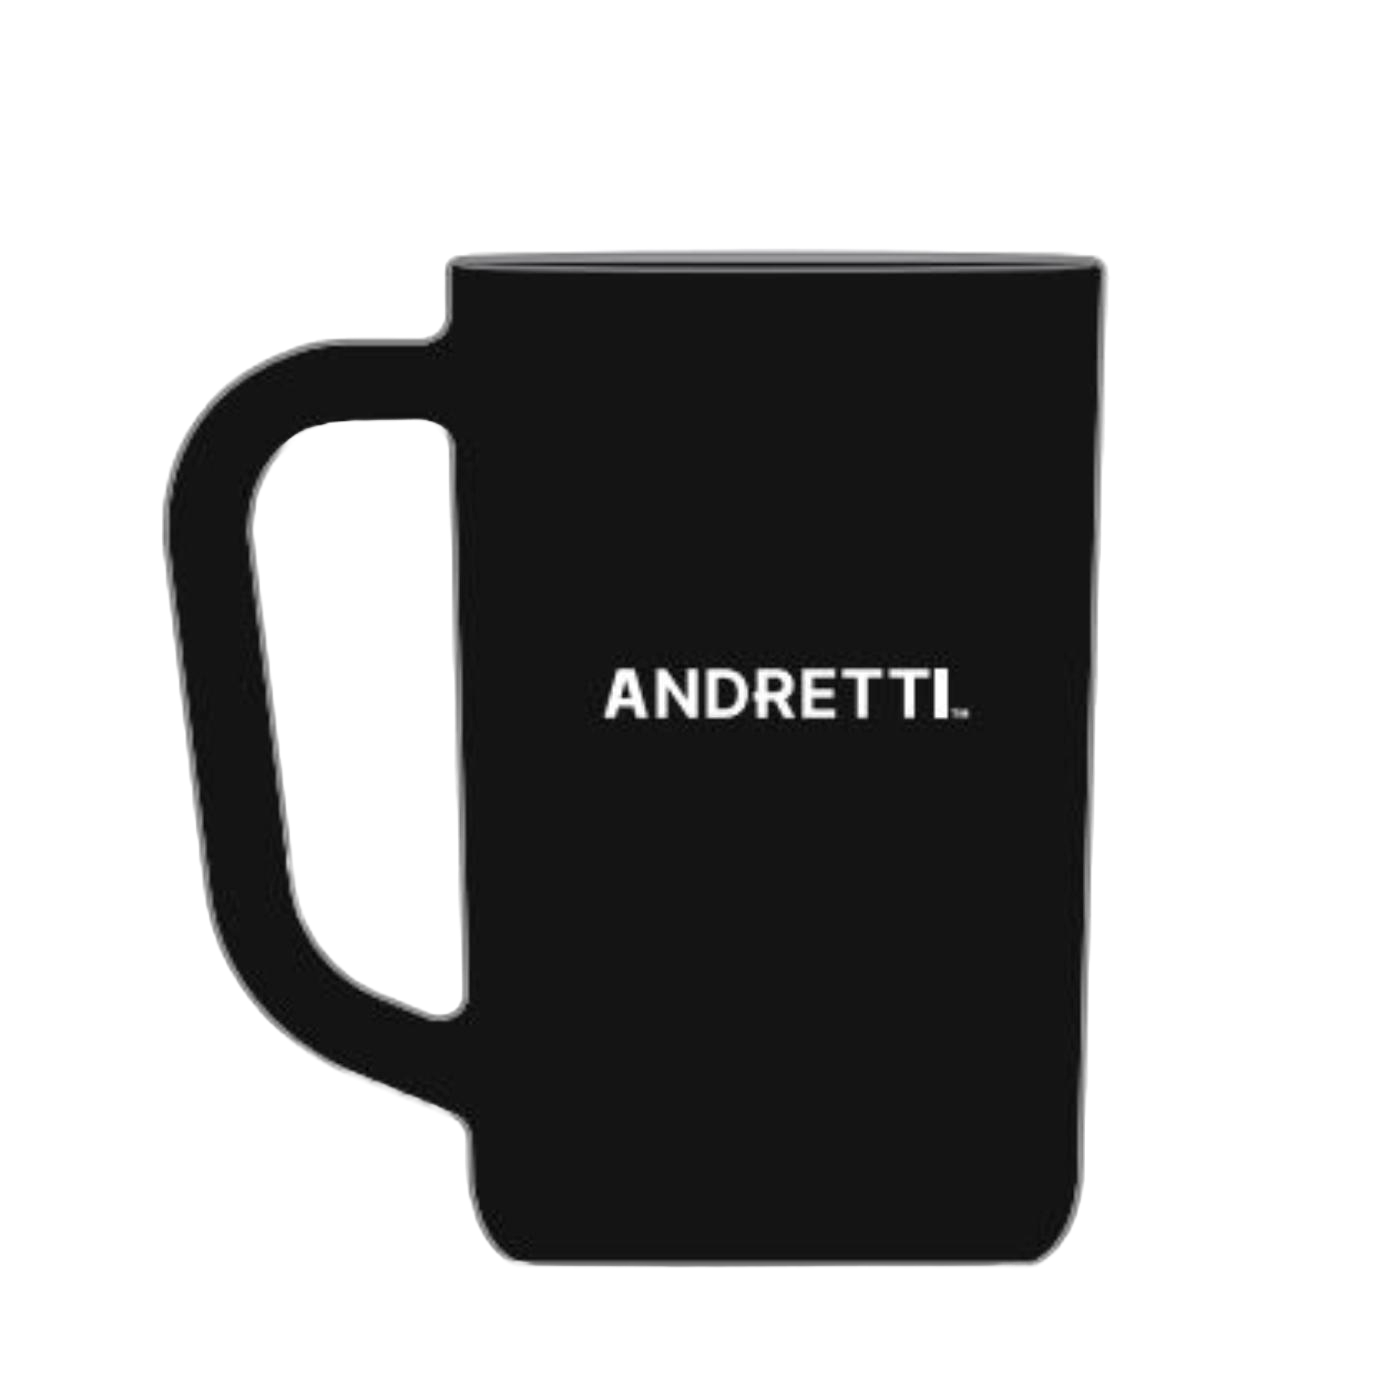 Andretti Ceramic Mug